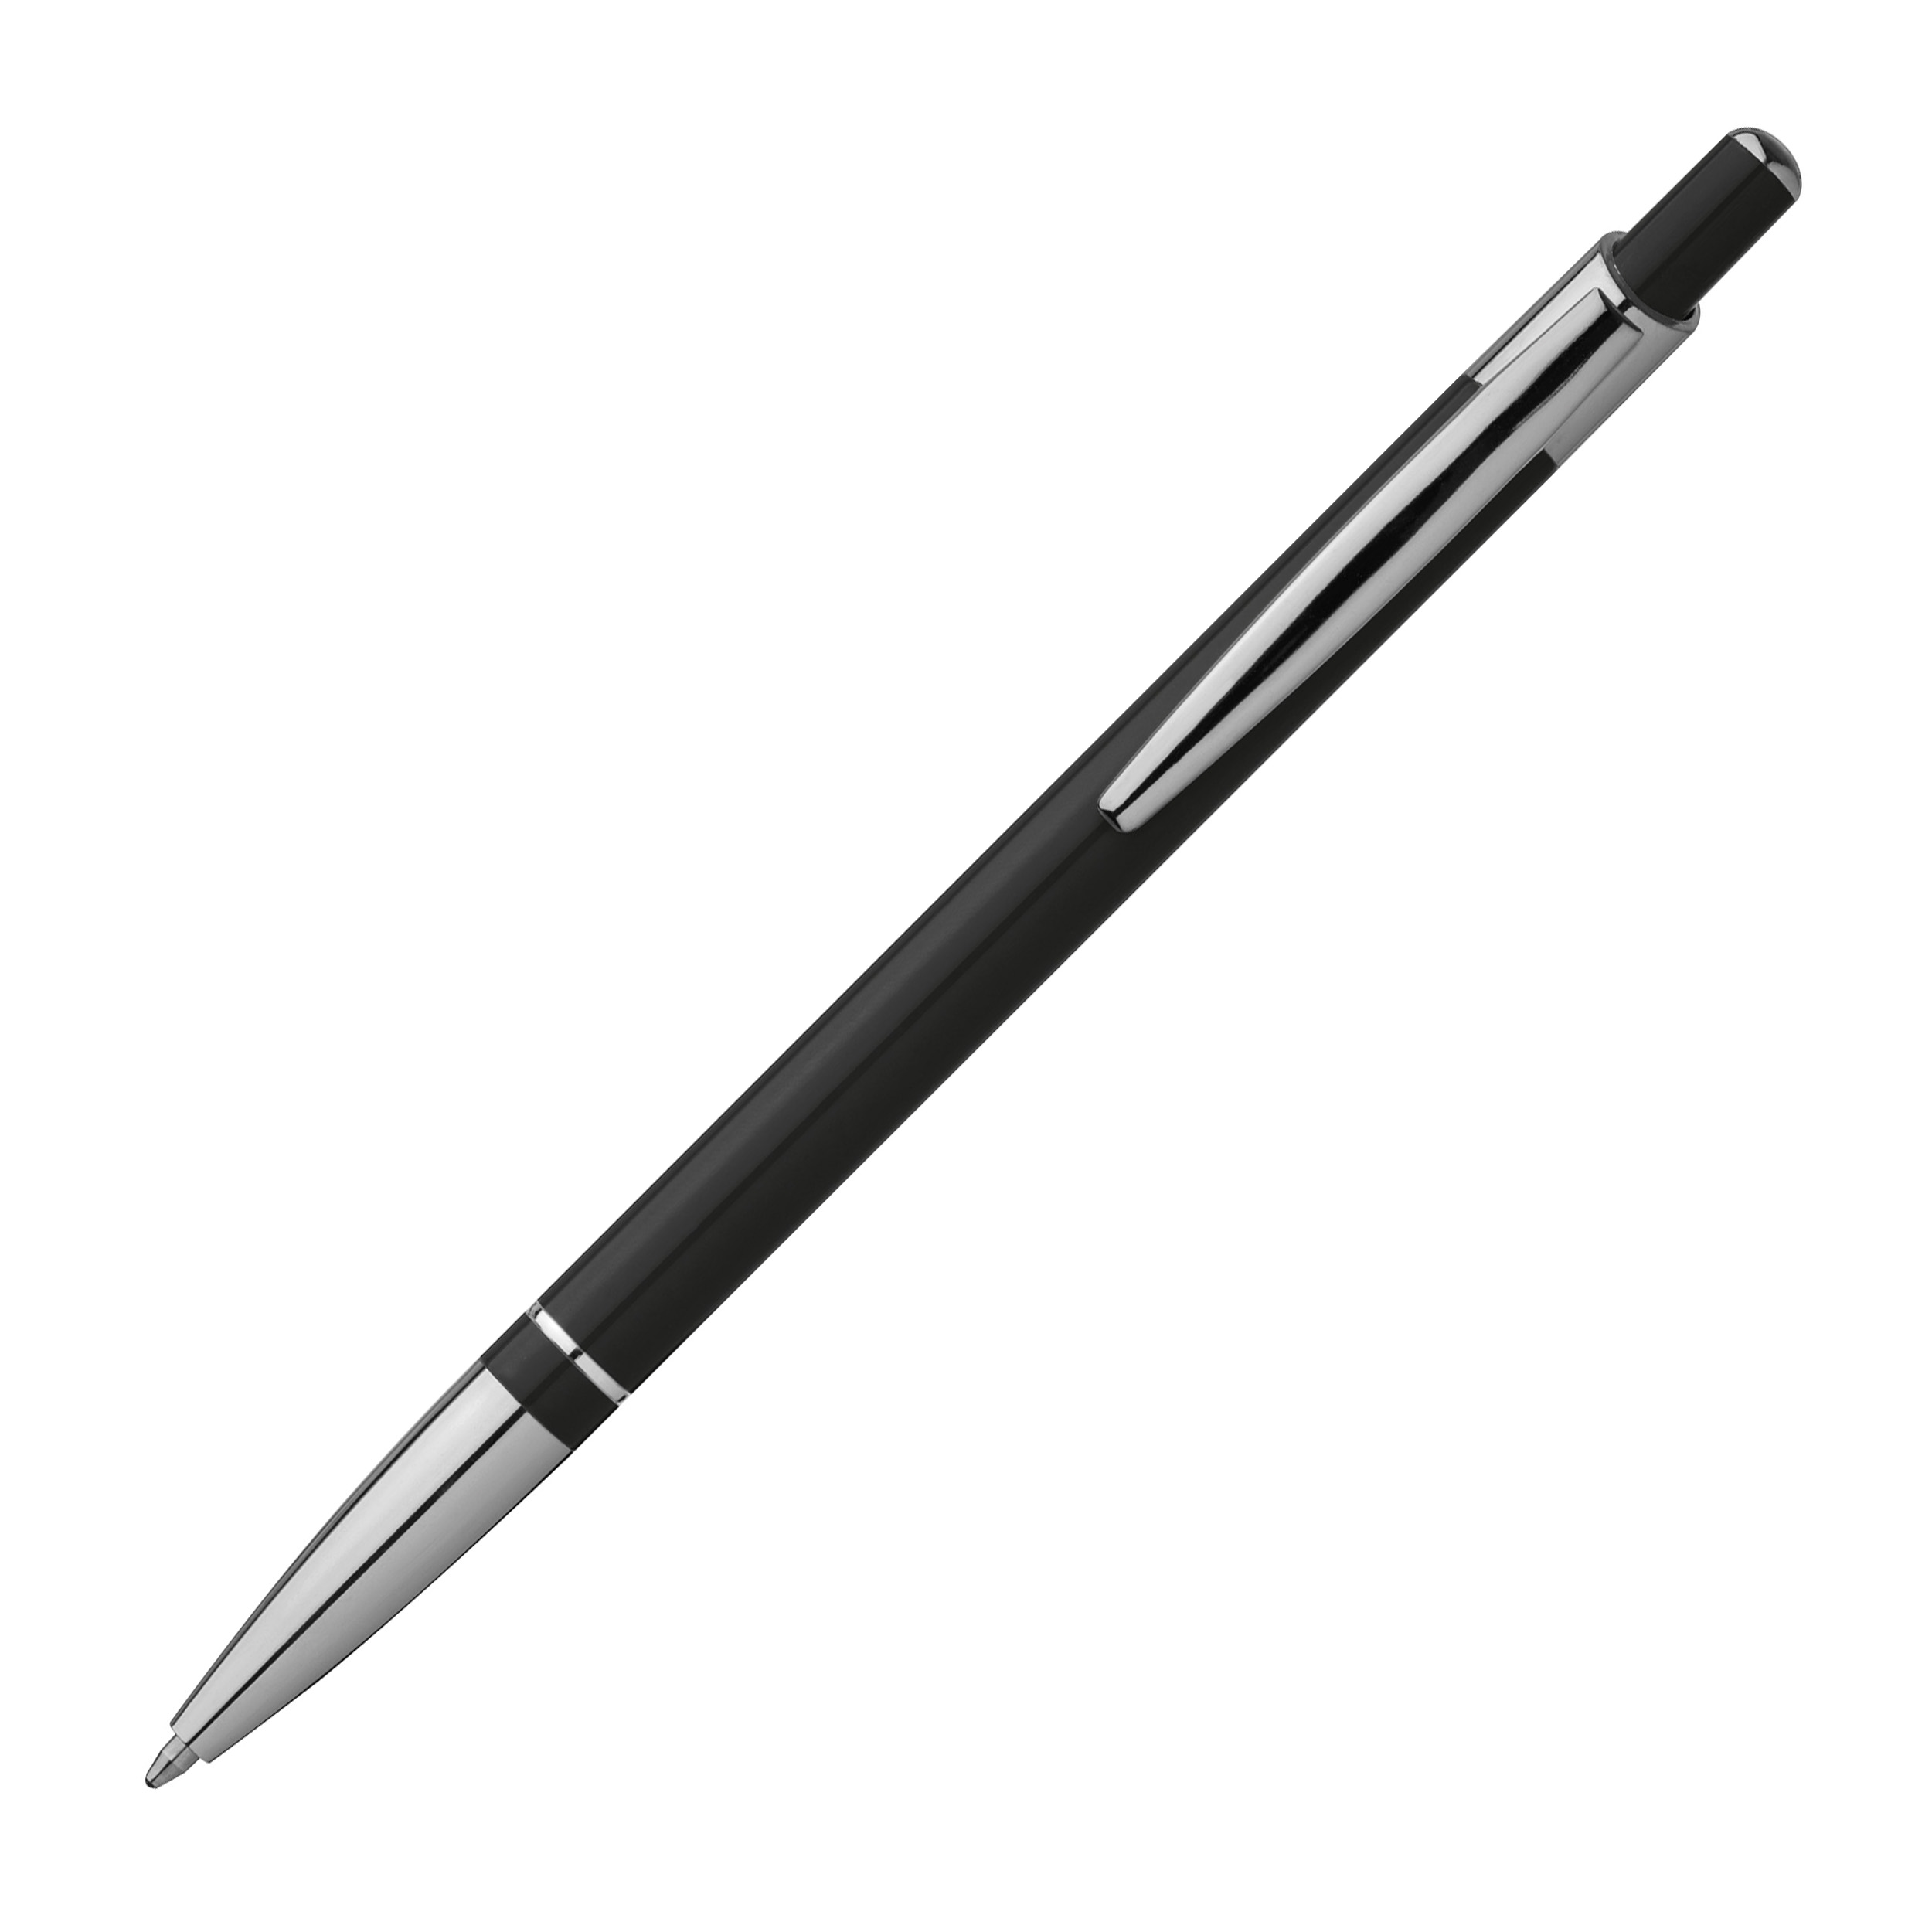 Metal ball pen